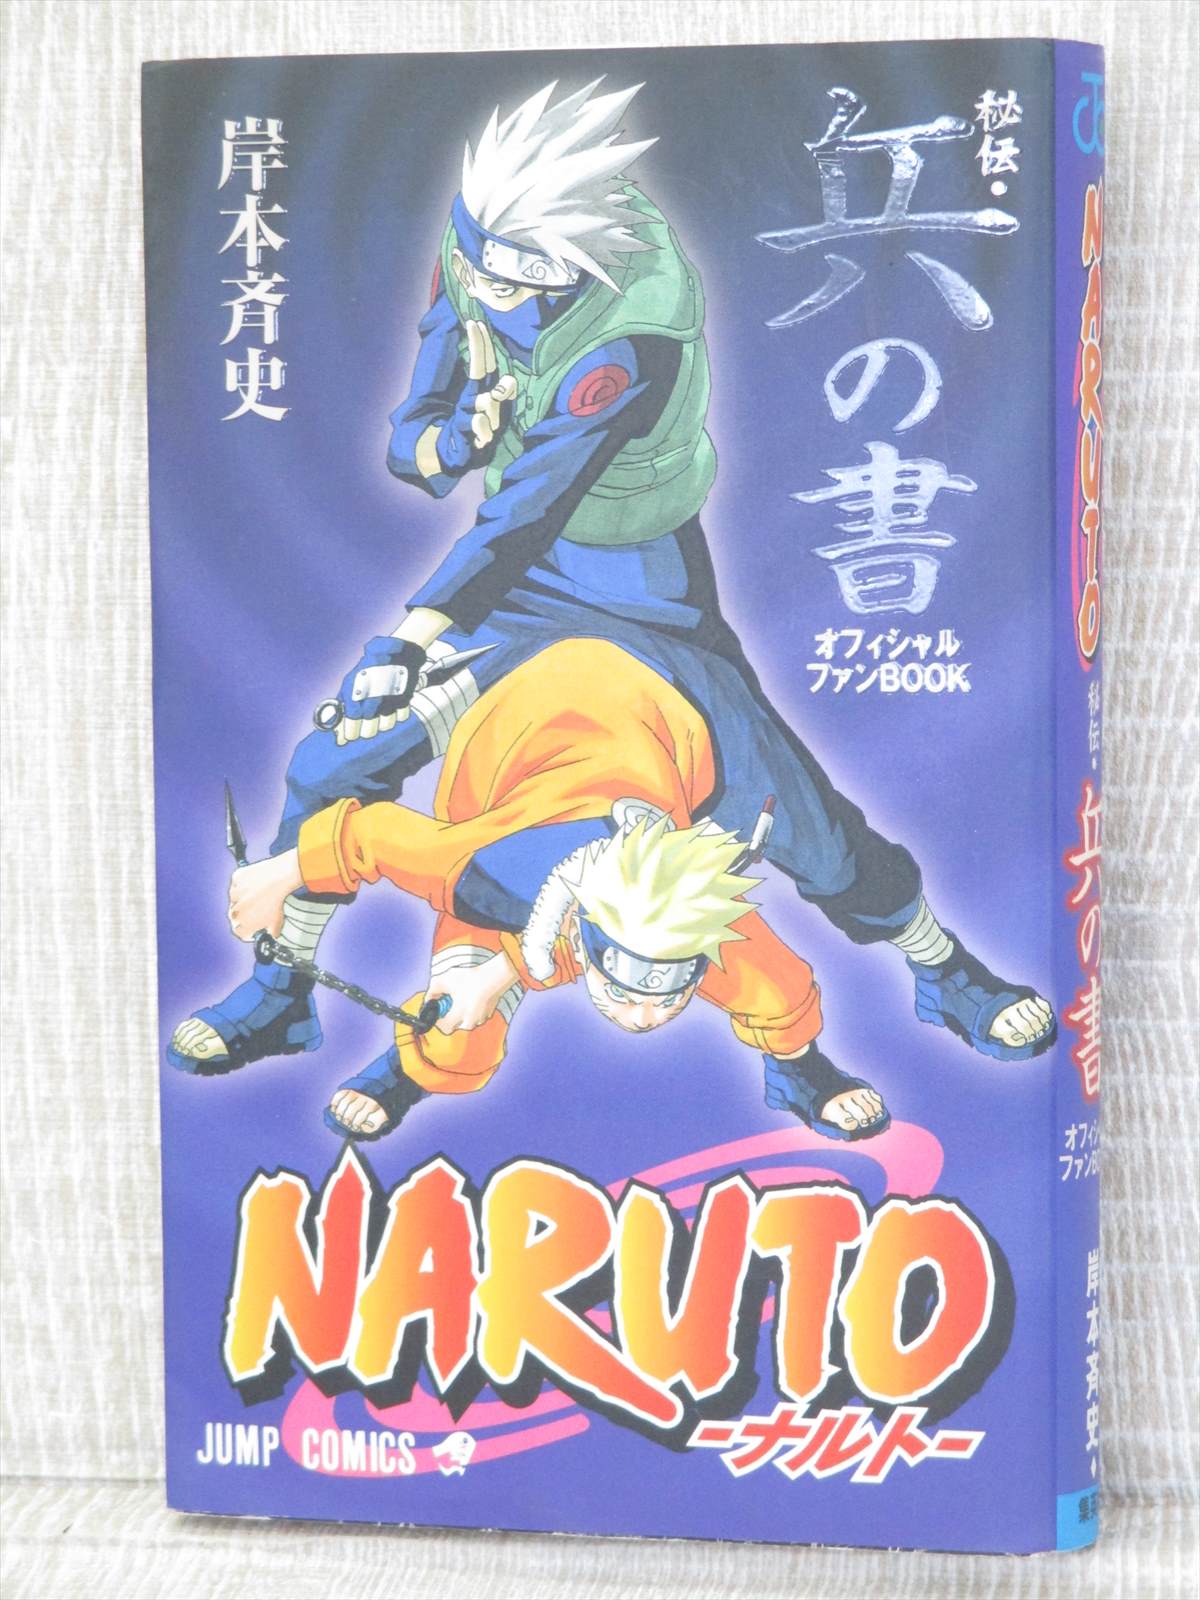 Naruto Book Zai No Sho Boruto Movie Visiter Limited Art Exhibition Jump Japanese Anime Drkingplaza Other Anime Collectibles